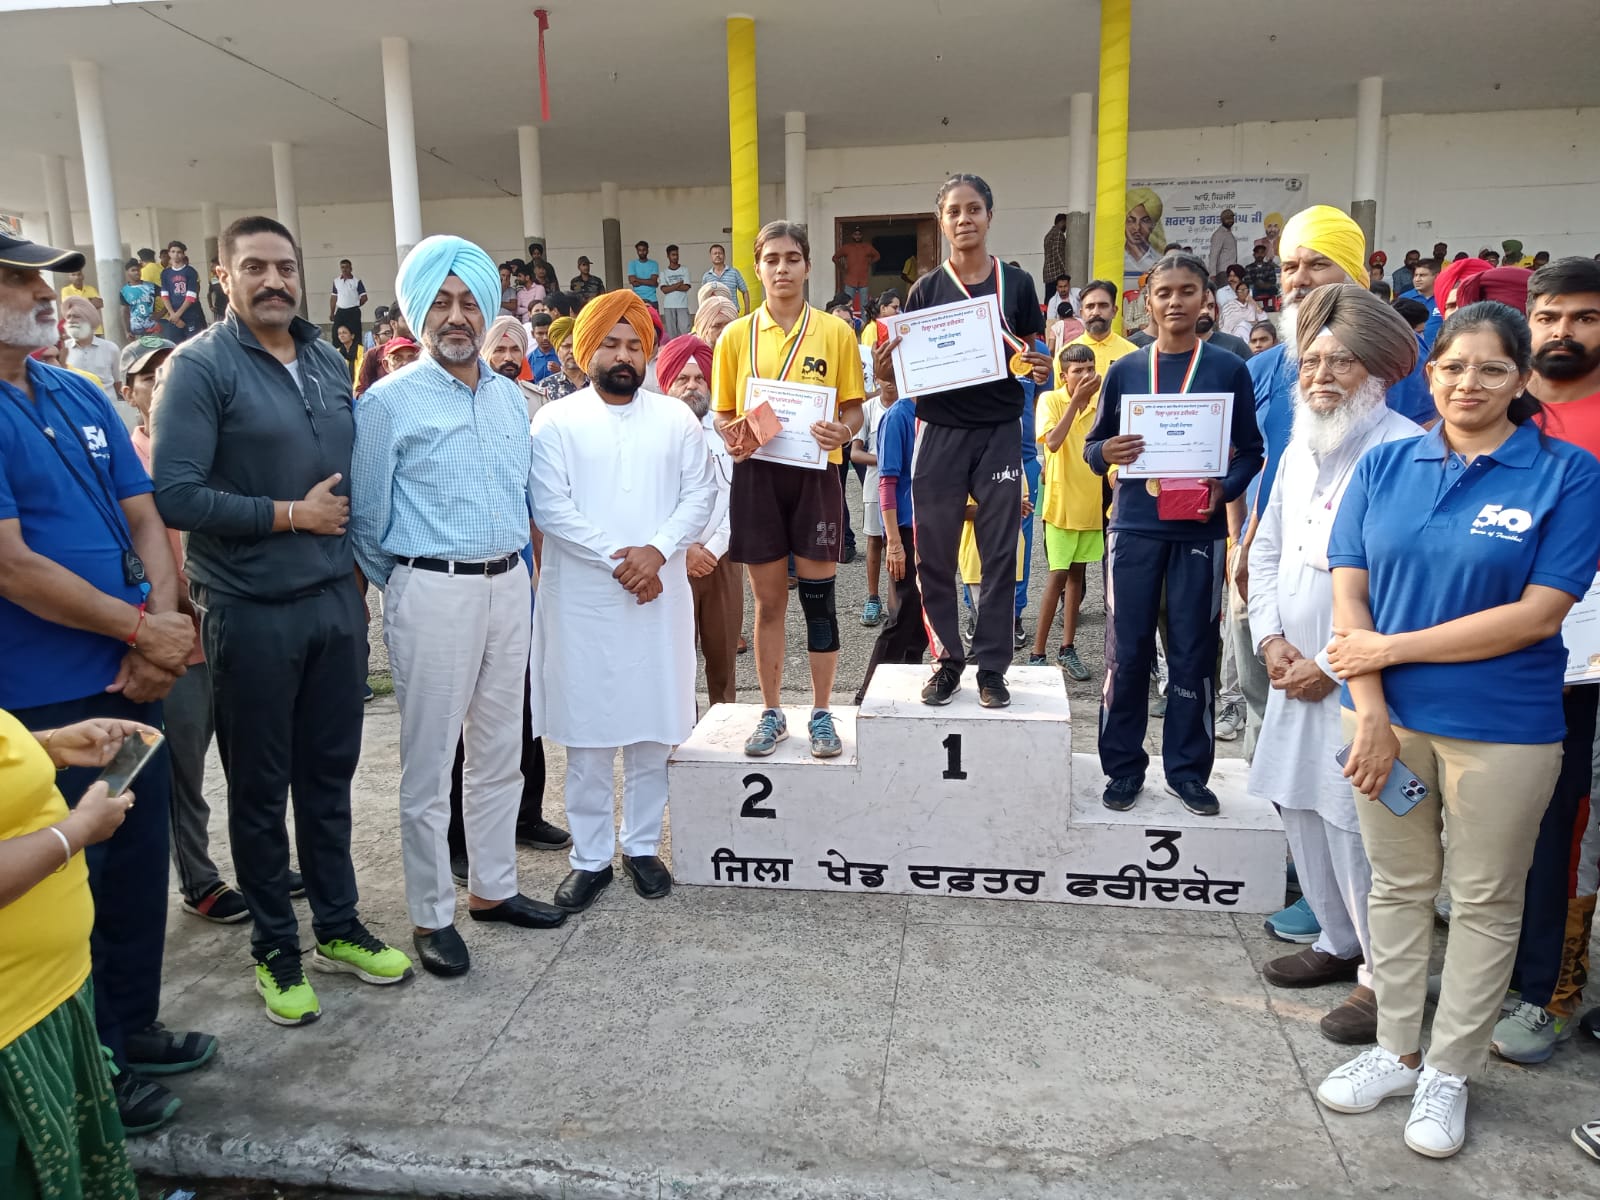 Marathon race dedicated to the birthday of Shaheed Bhagat Singh arranged in  Faridkot